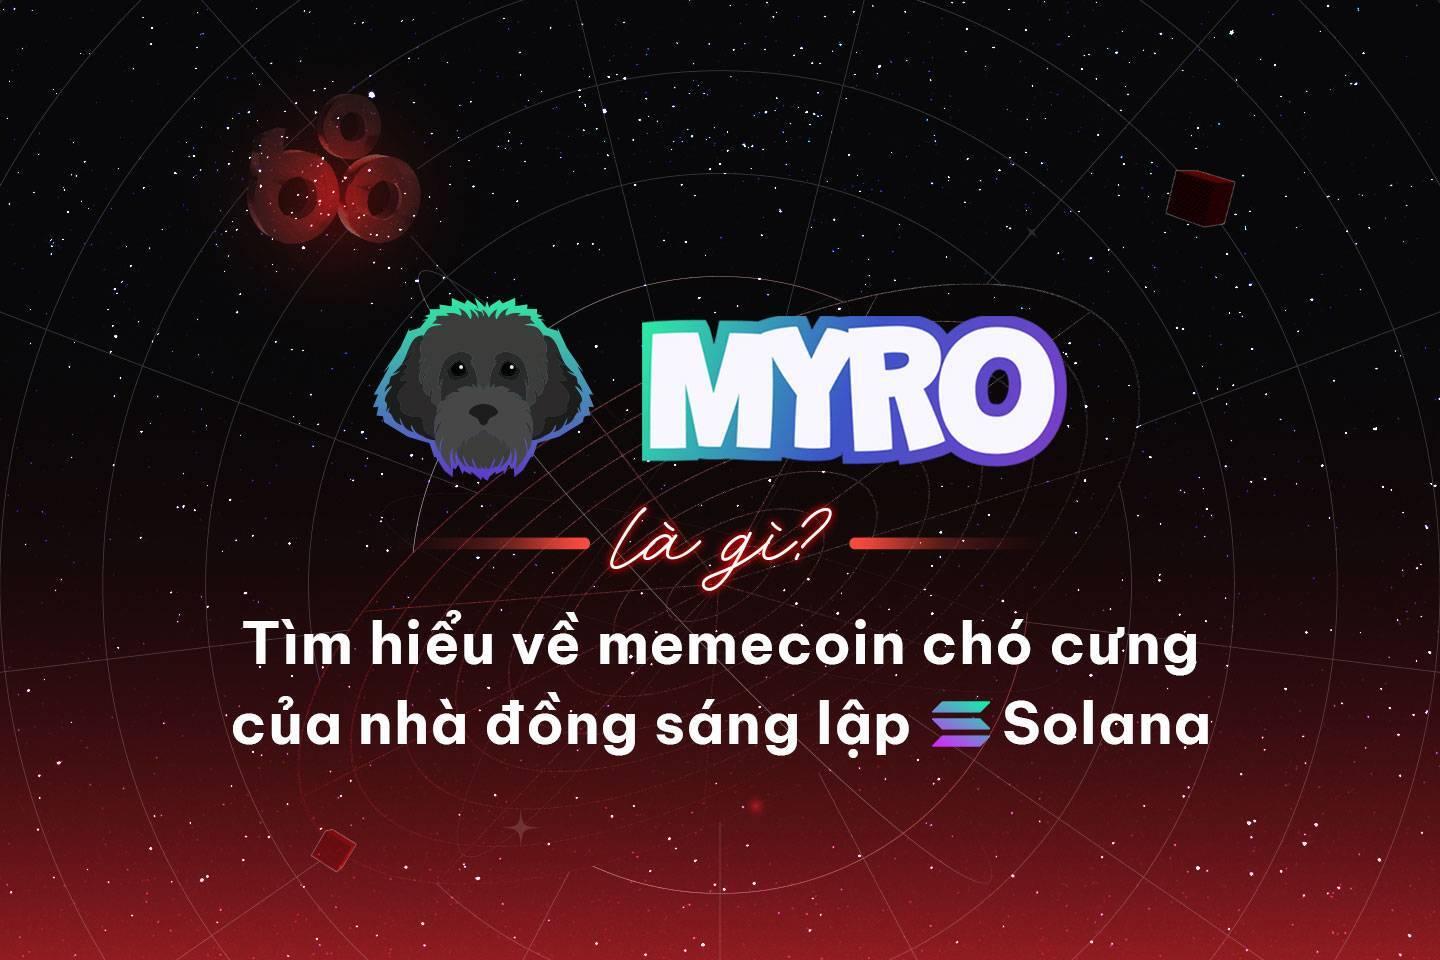 myro-la-gi-tim-hieu-ve-memecoin-cho-cung-cua-nha-dong-sang-lap-solana